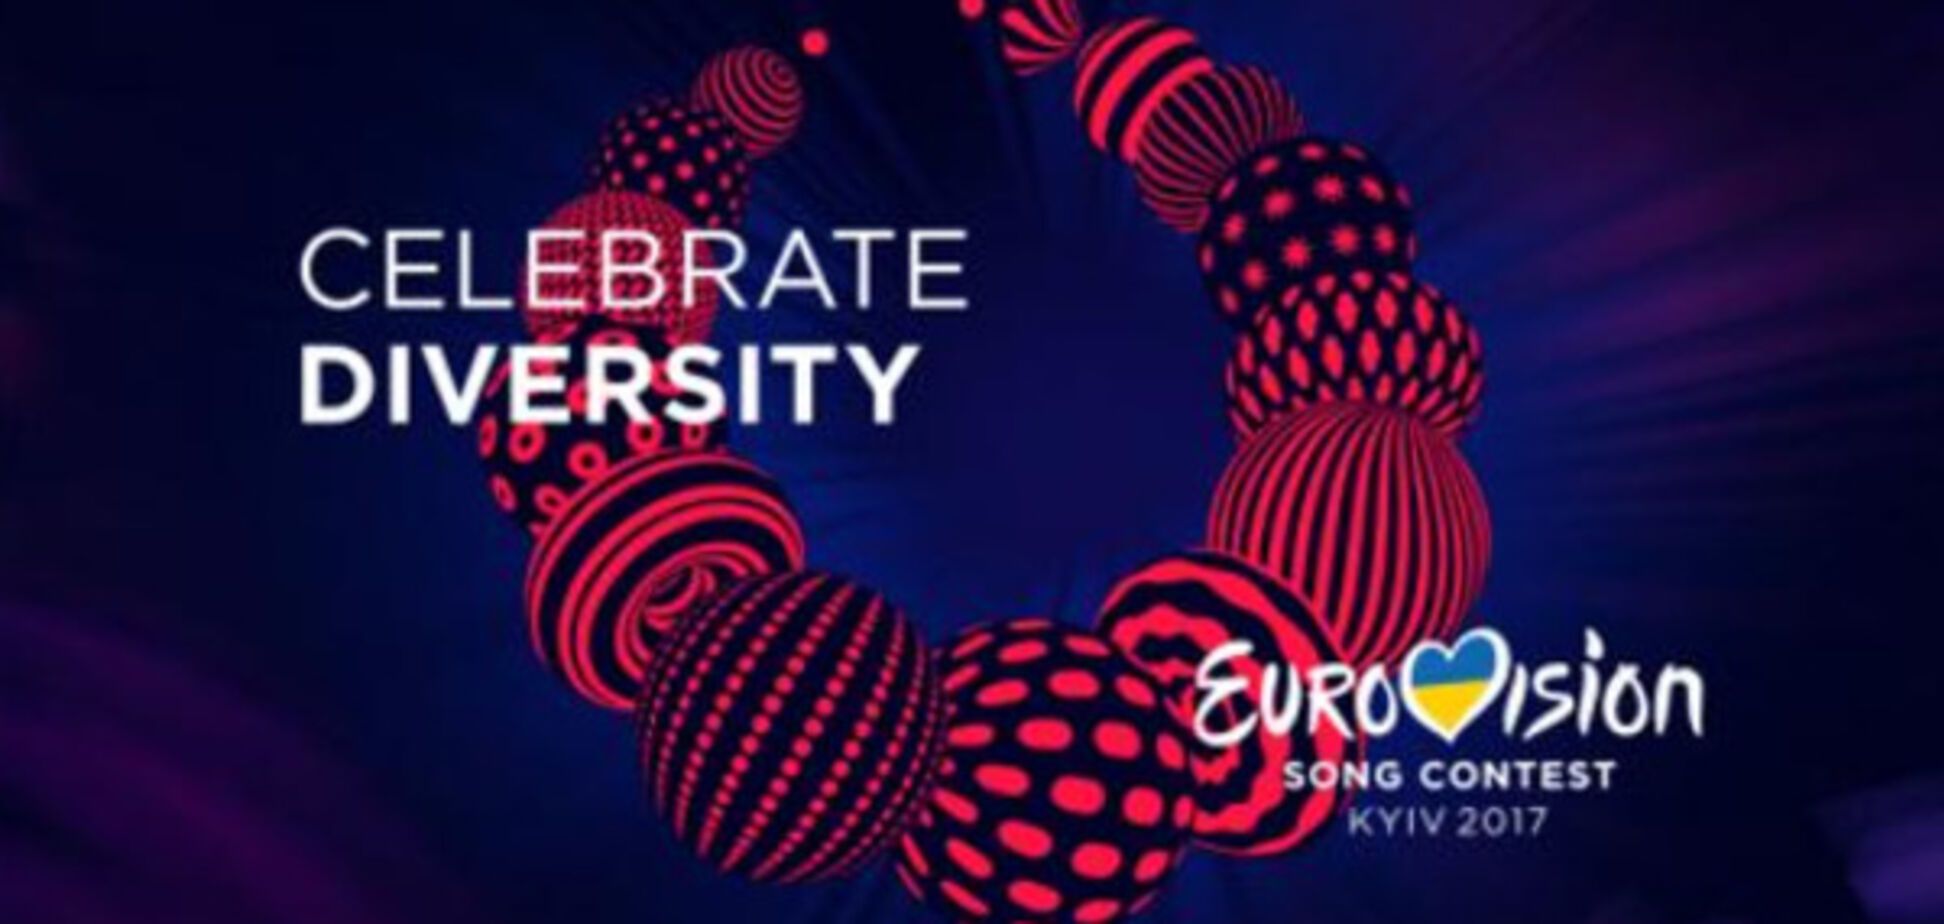 eurovision 2017 ukraine